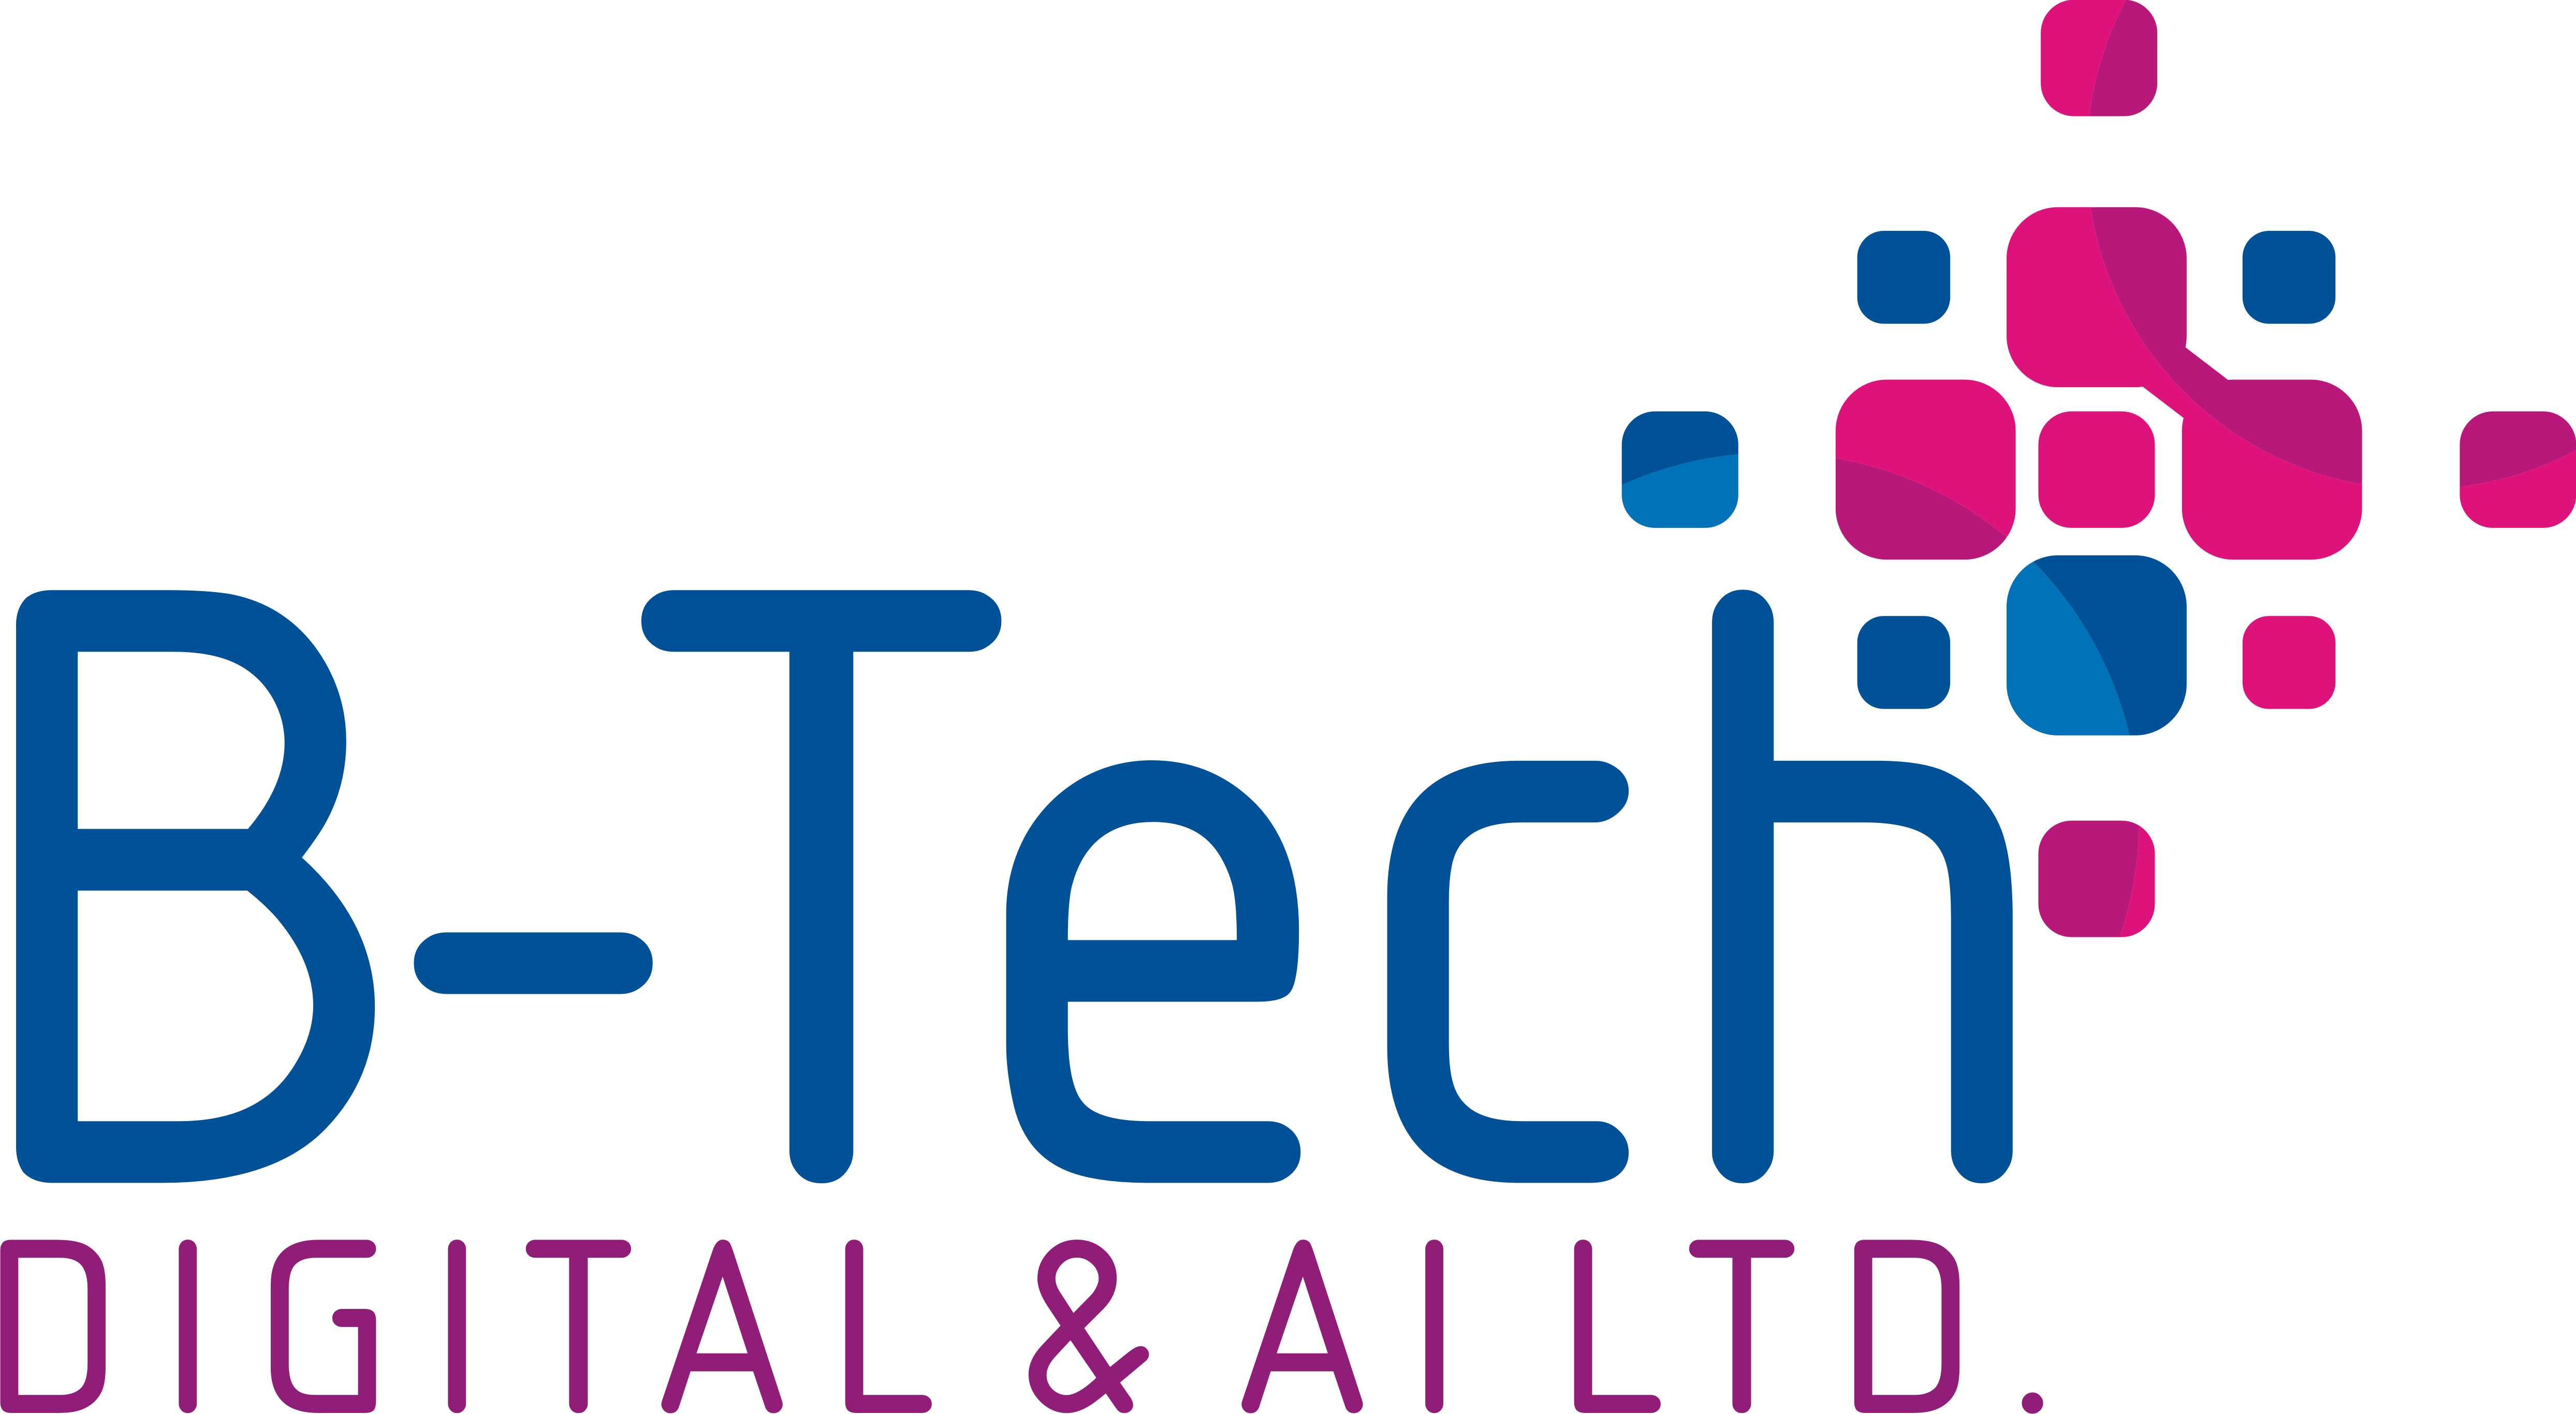 Btech Digital